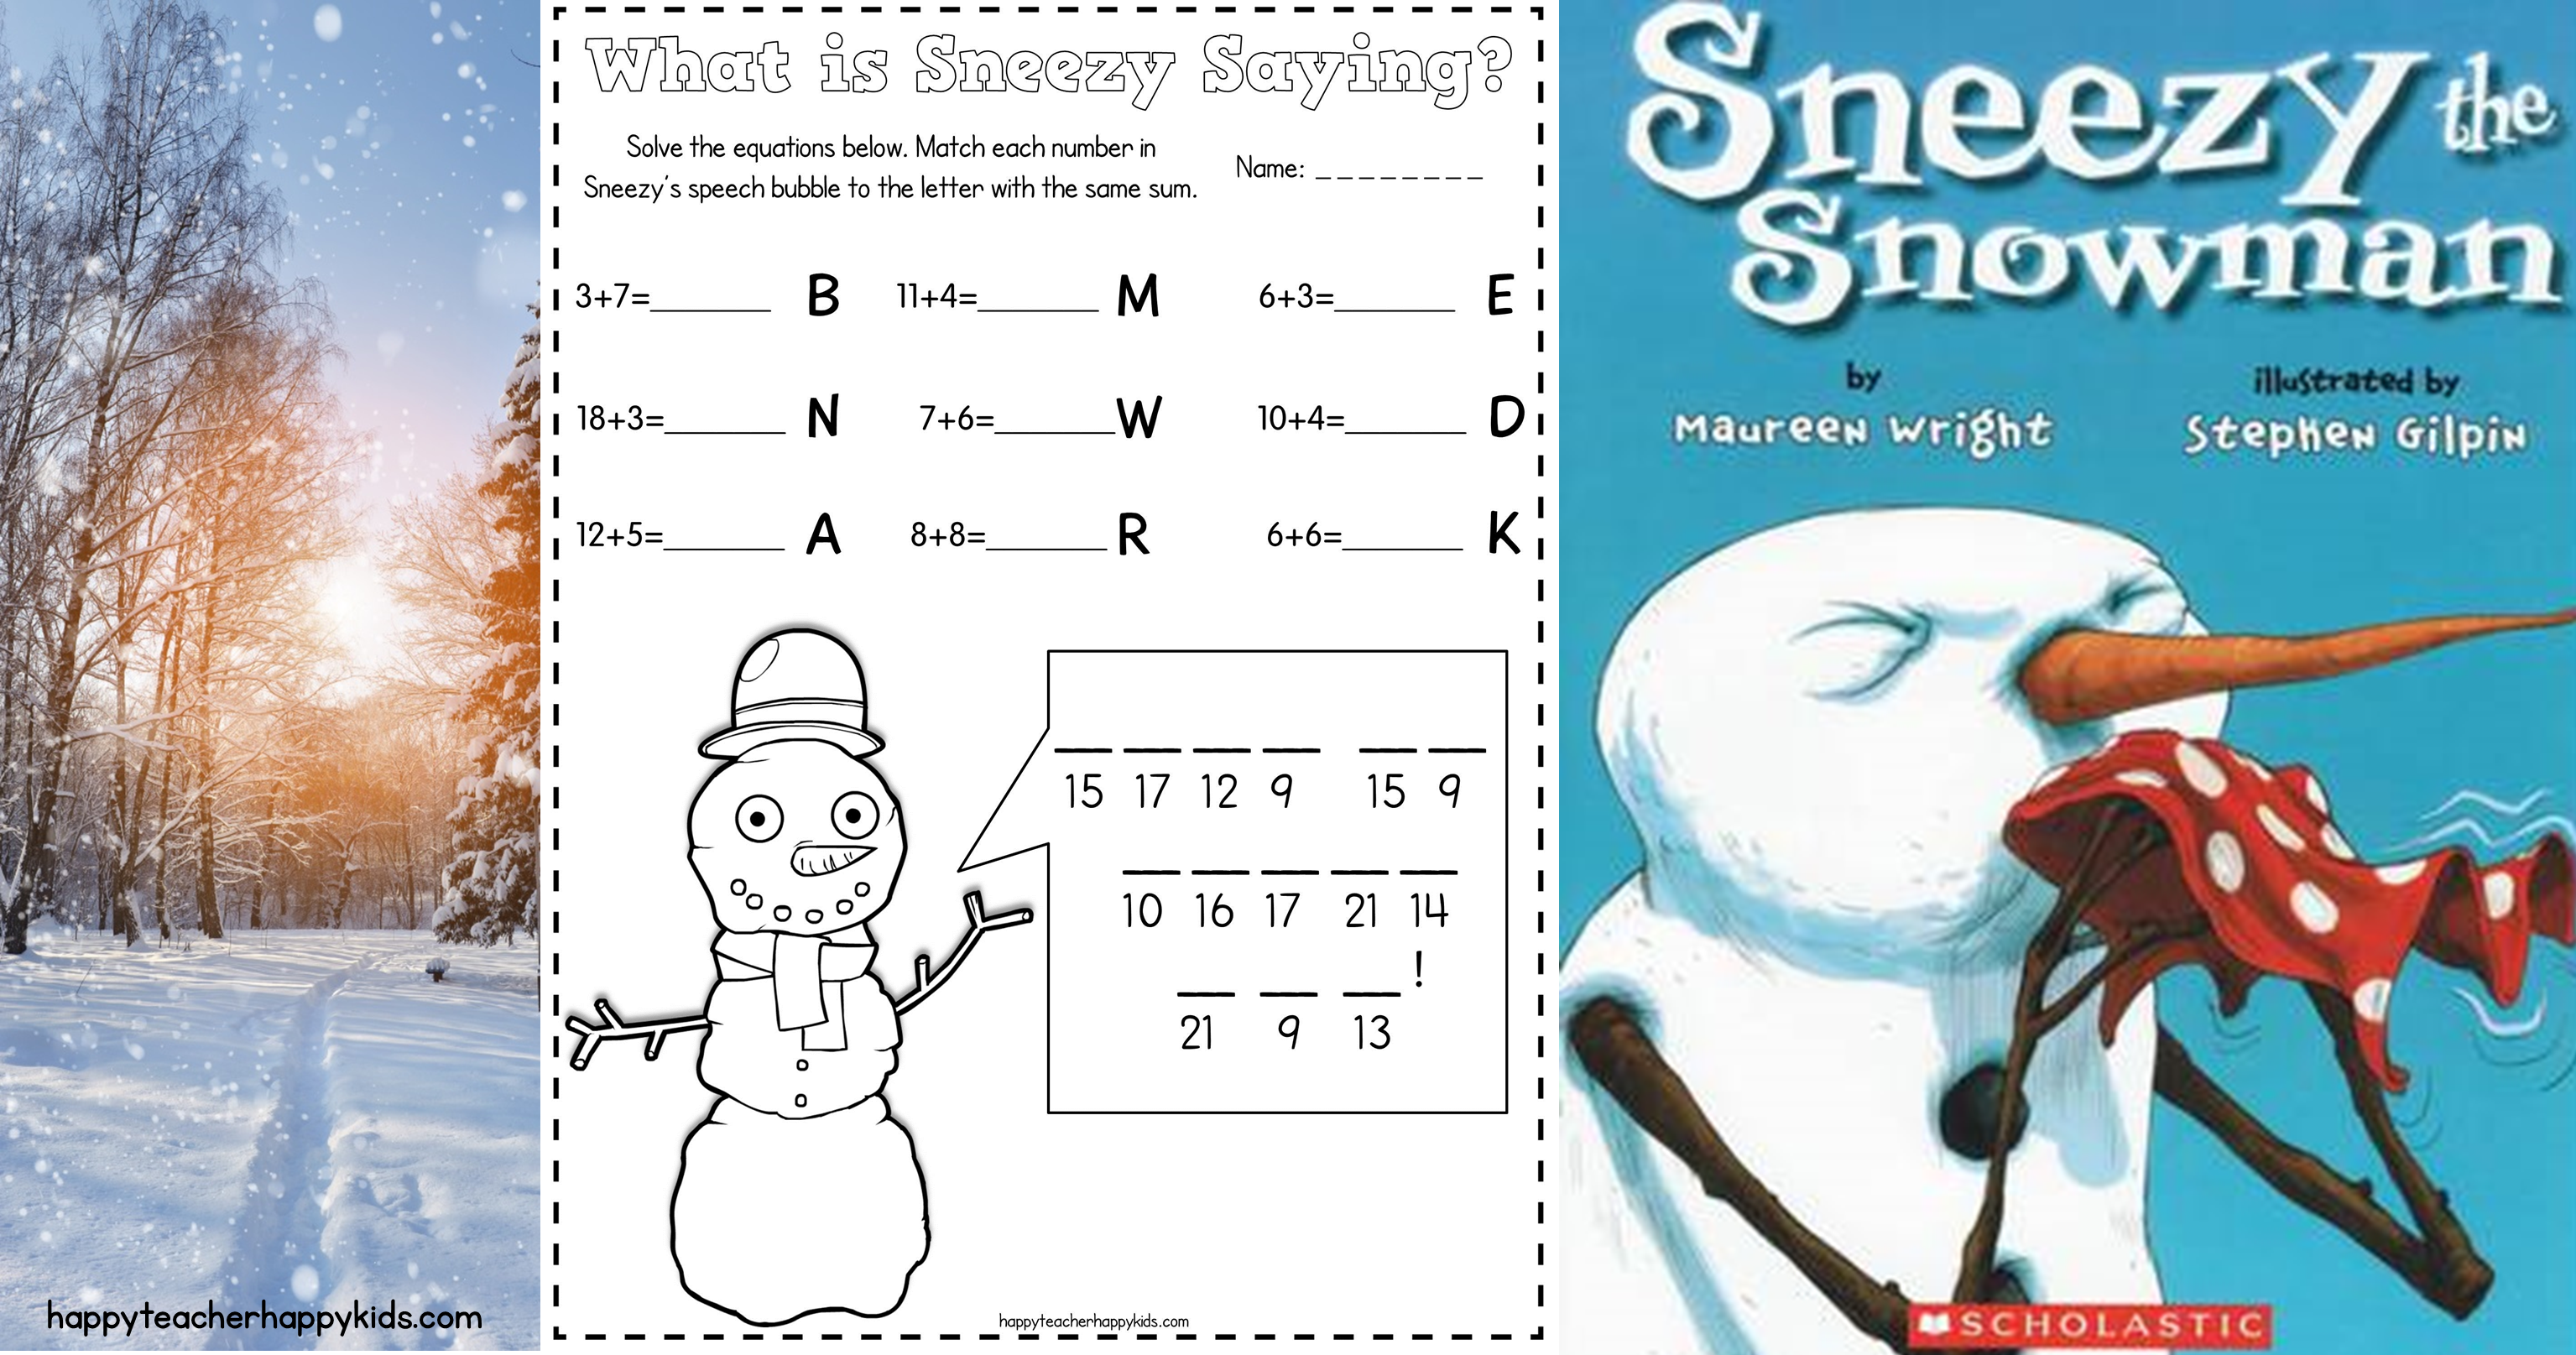 Sneezy the Snowman Ideas - Happy Teacher, Happy Kids3070 x 1615